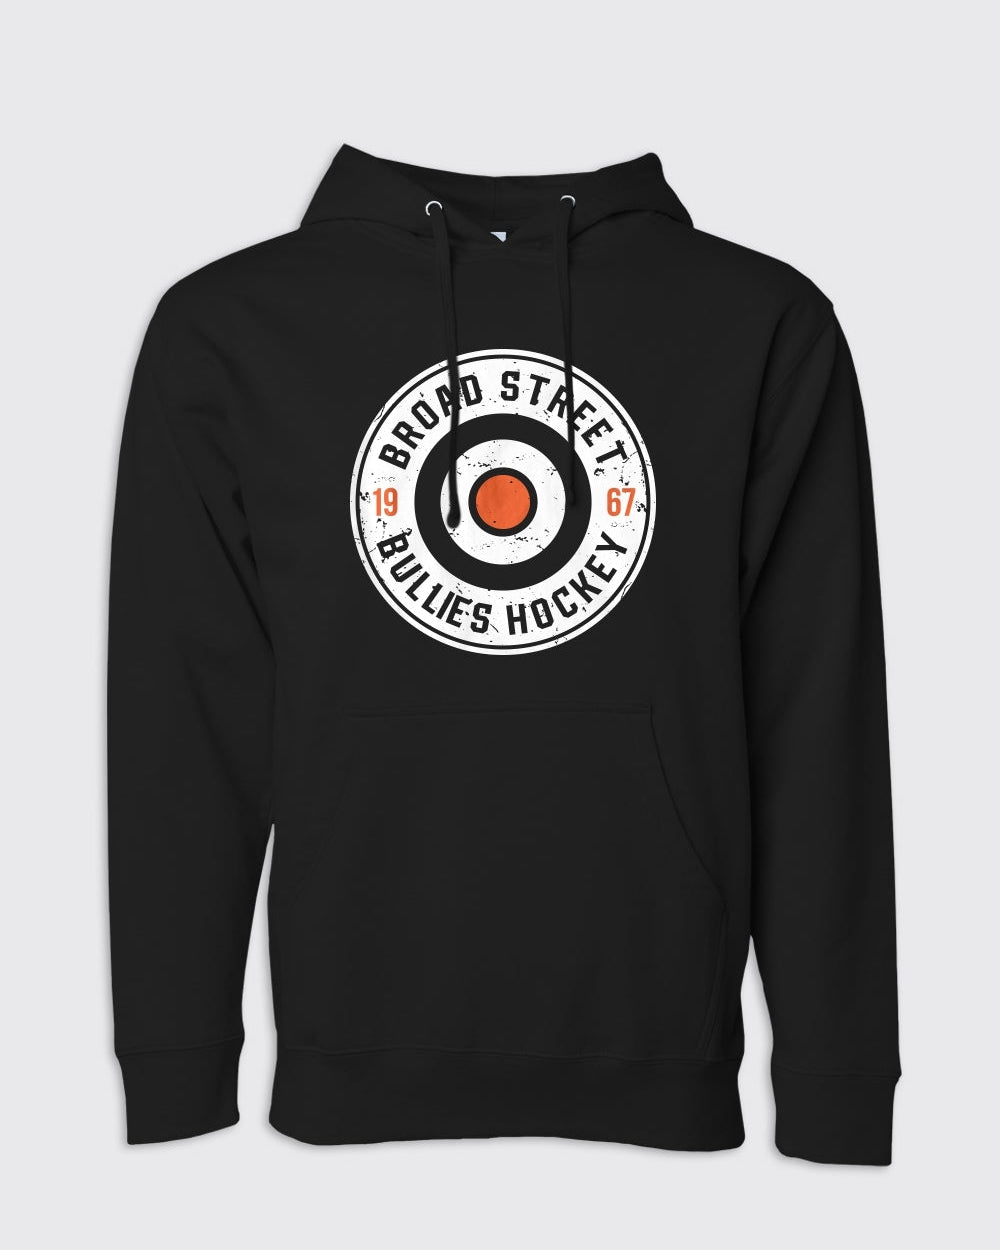 Broad Street Bullies Hockey Hoodie - Flyers, Hoodies - Philly Sports Shirts